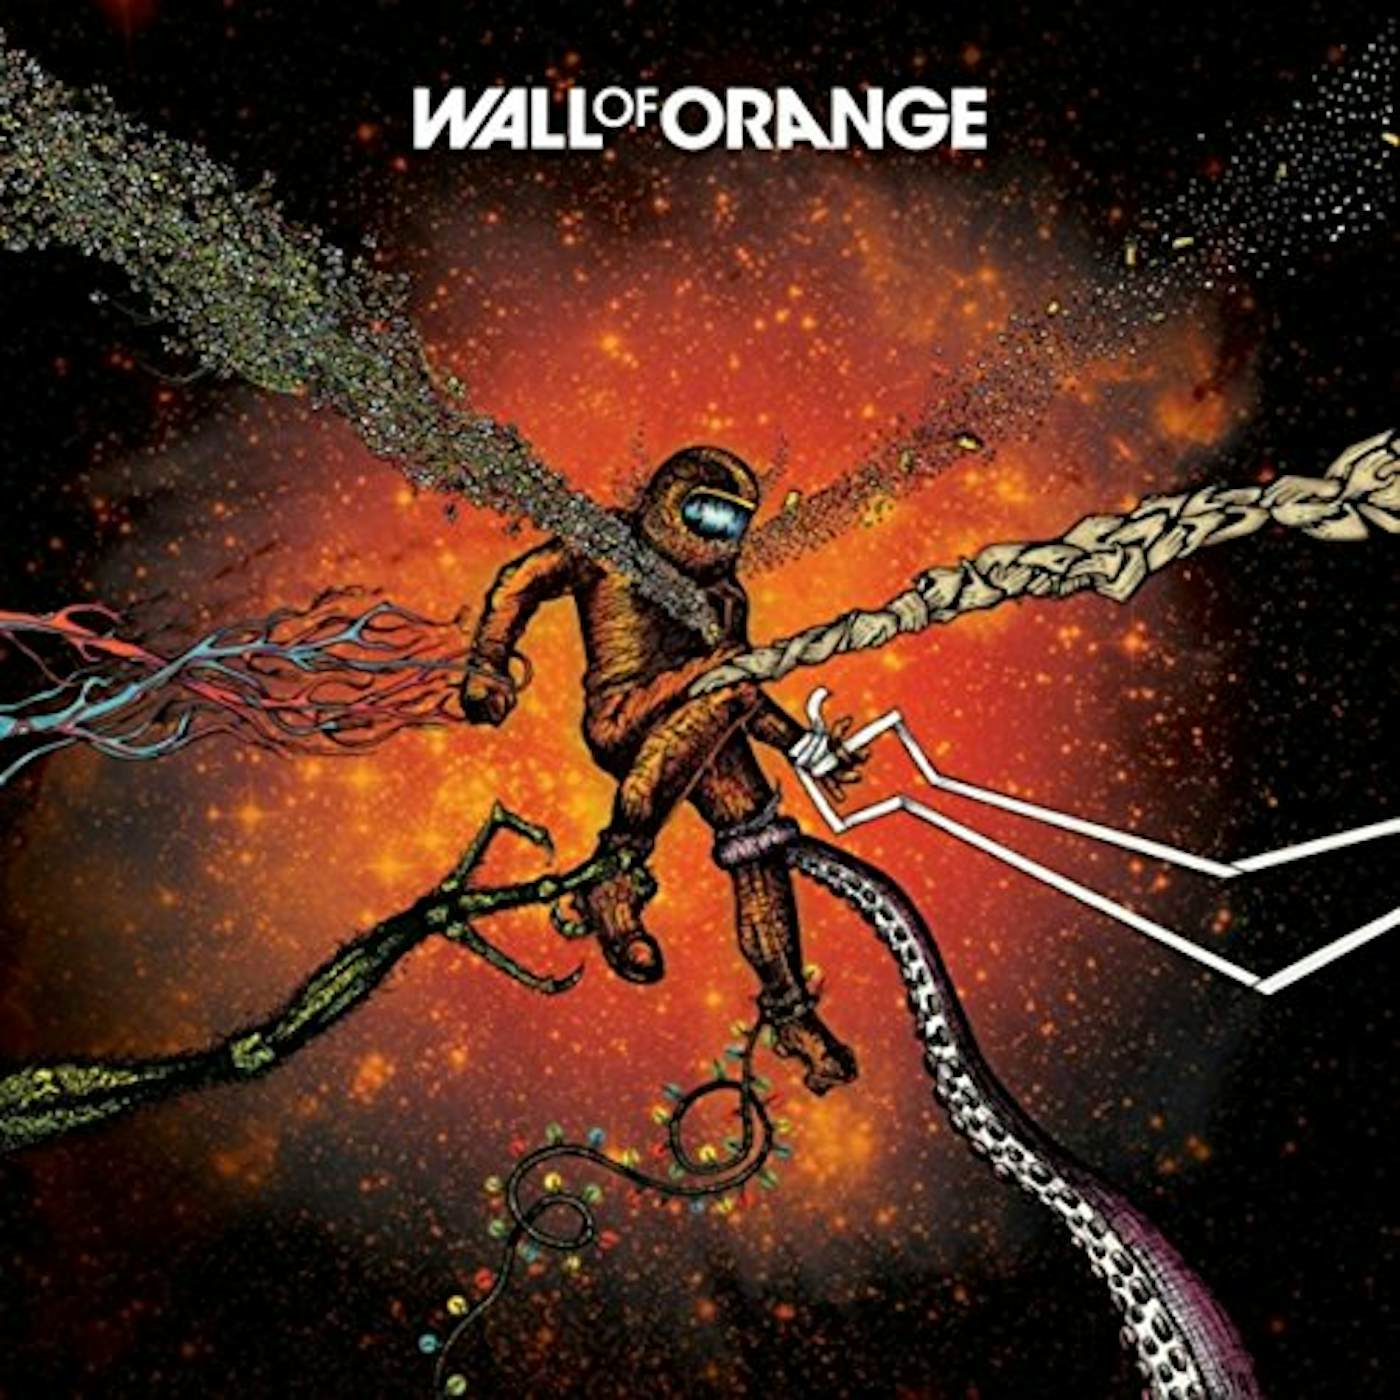 Wall of Orange Vinyl Record